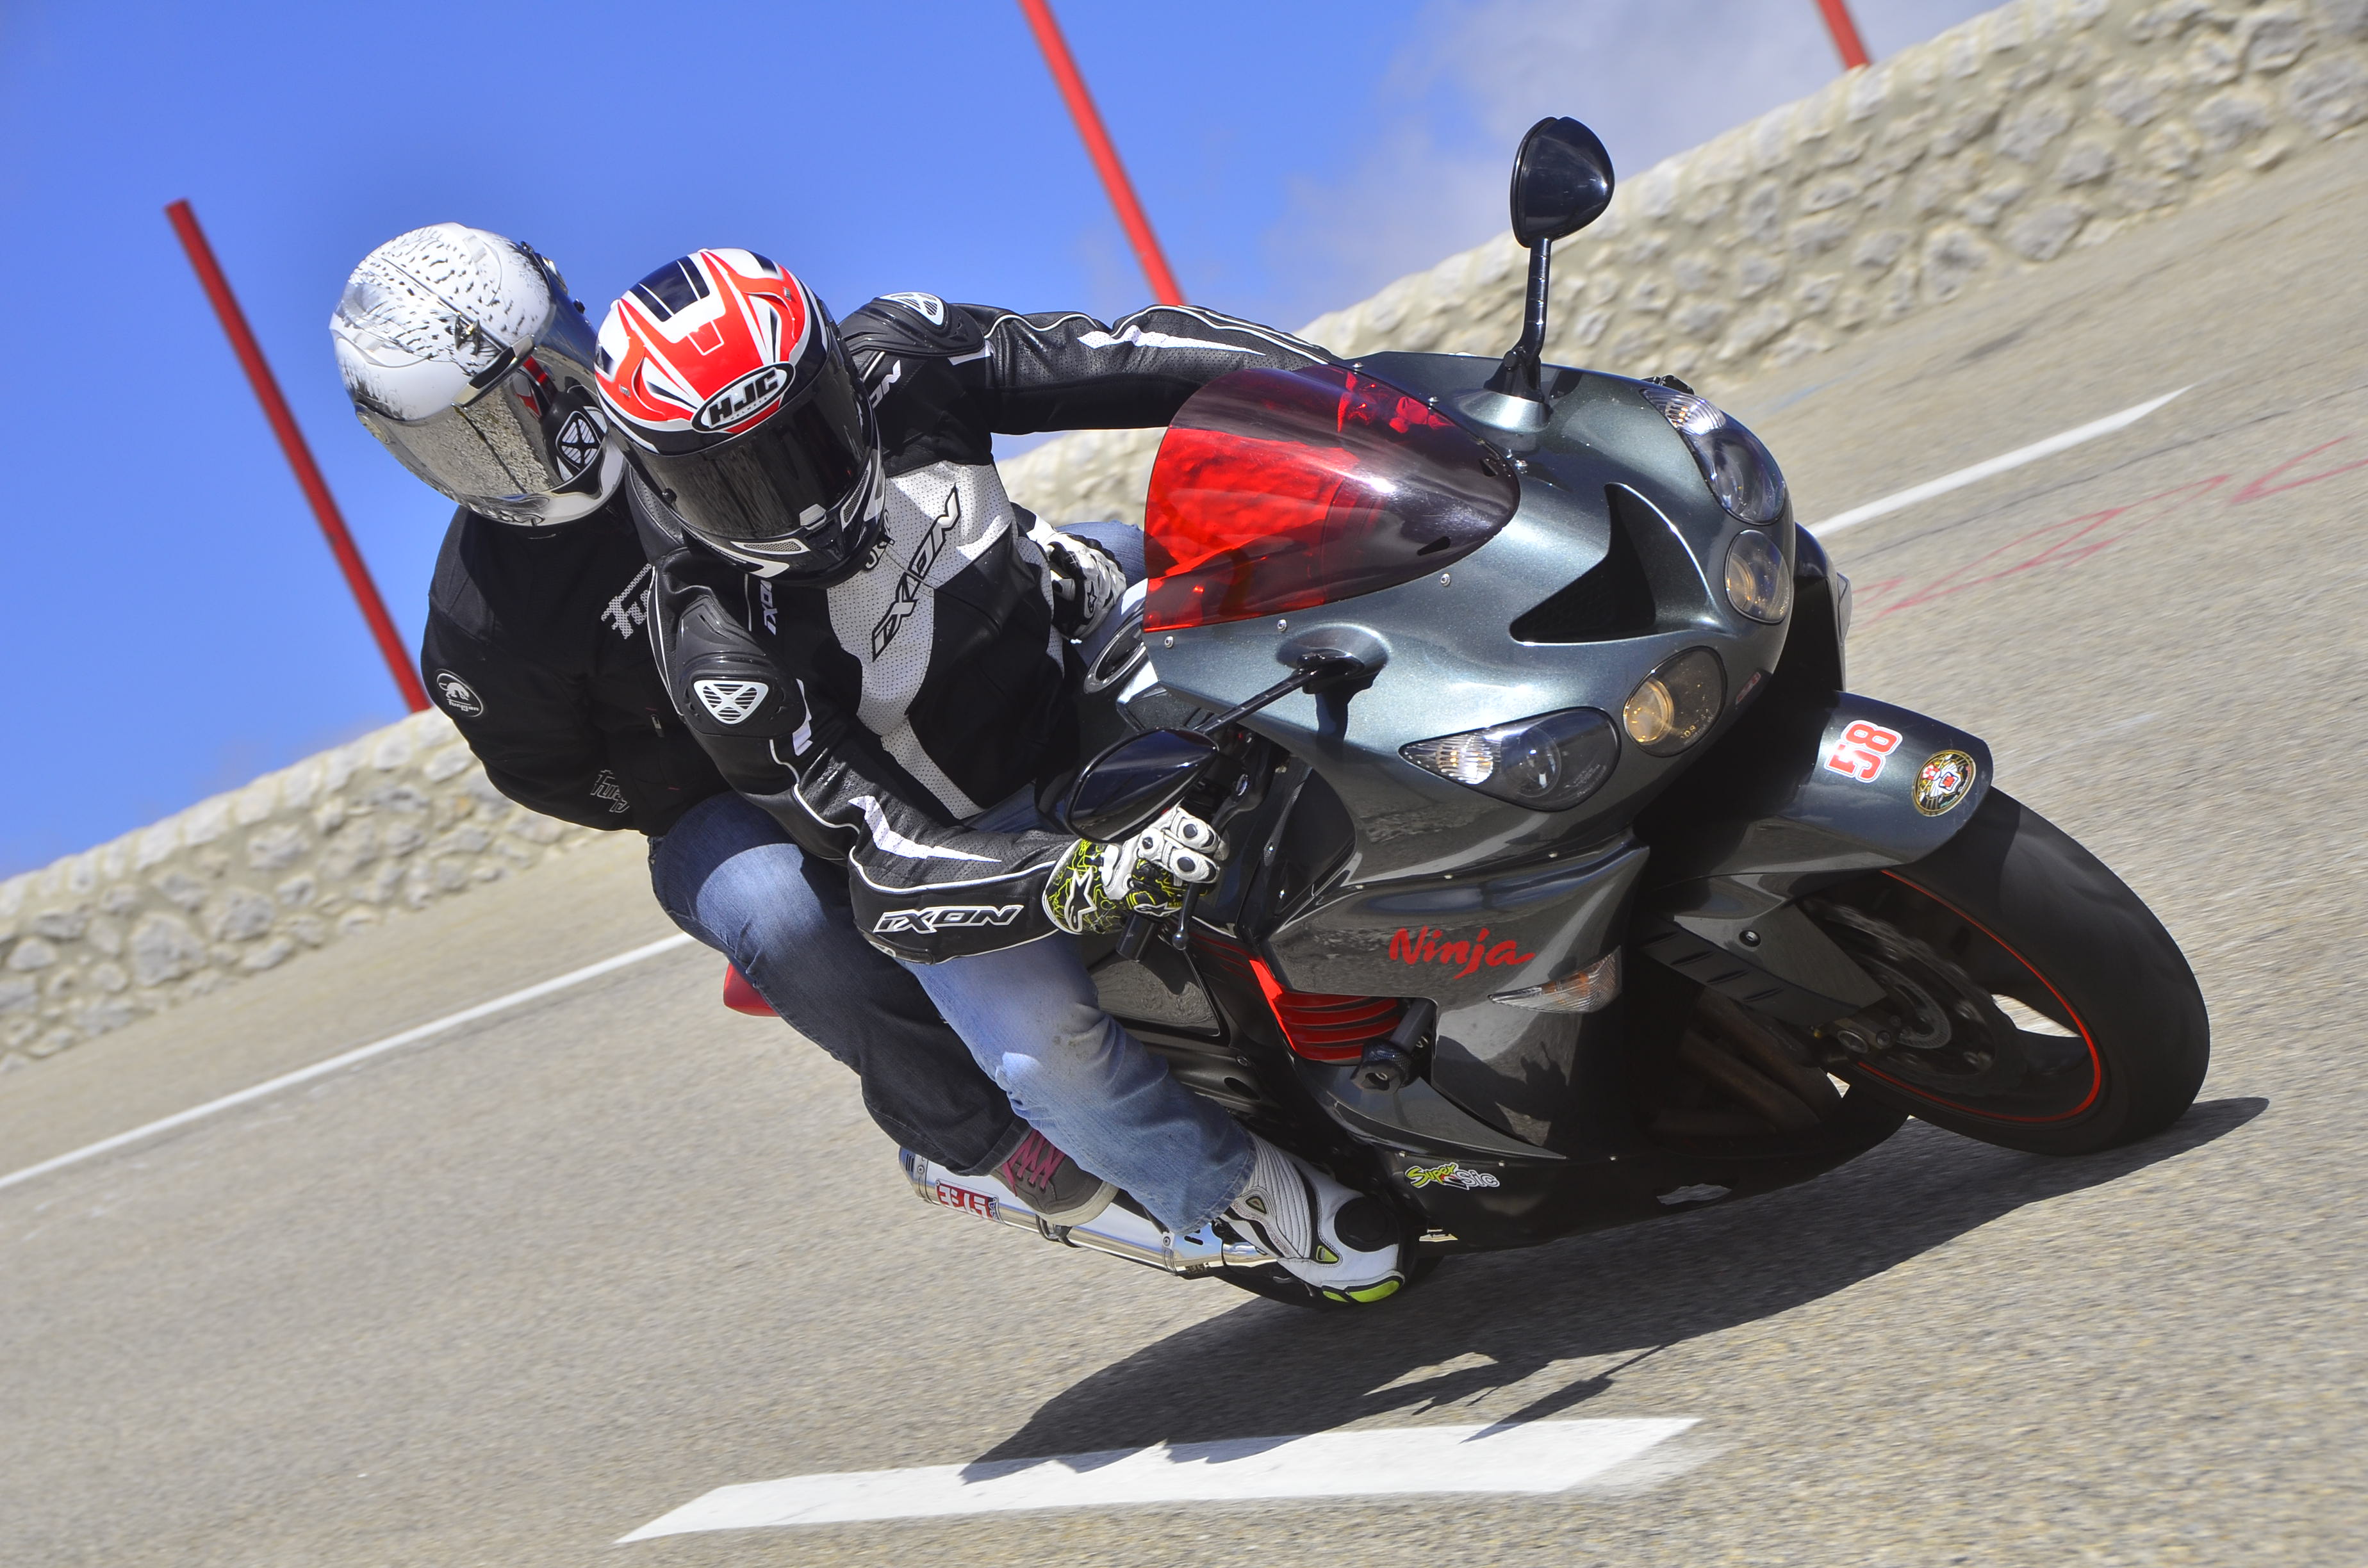 Photographe Mont Ventoux - Cornering motorcycle